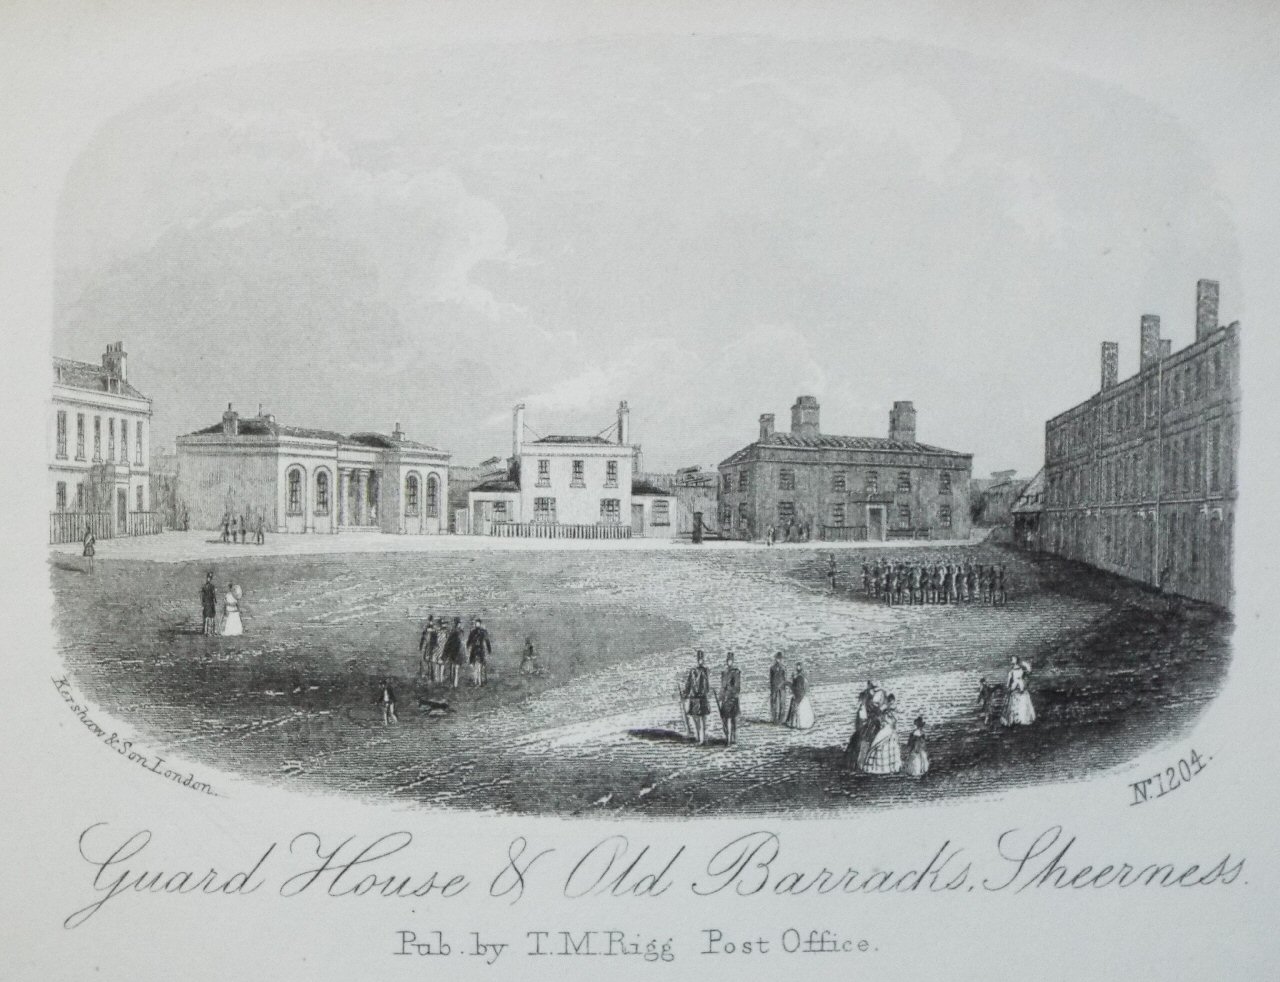 Steel Vignette - Guard House & Old Barracks, Sheerness. - Kershaw